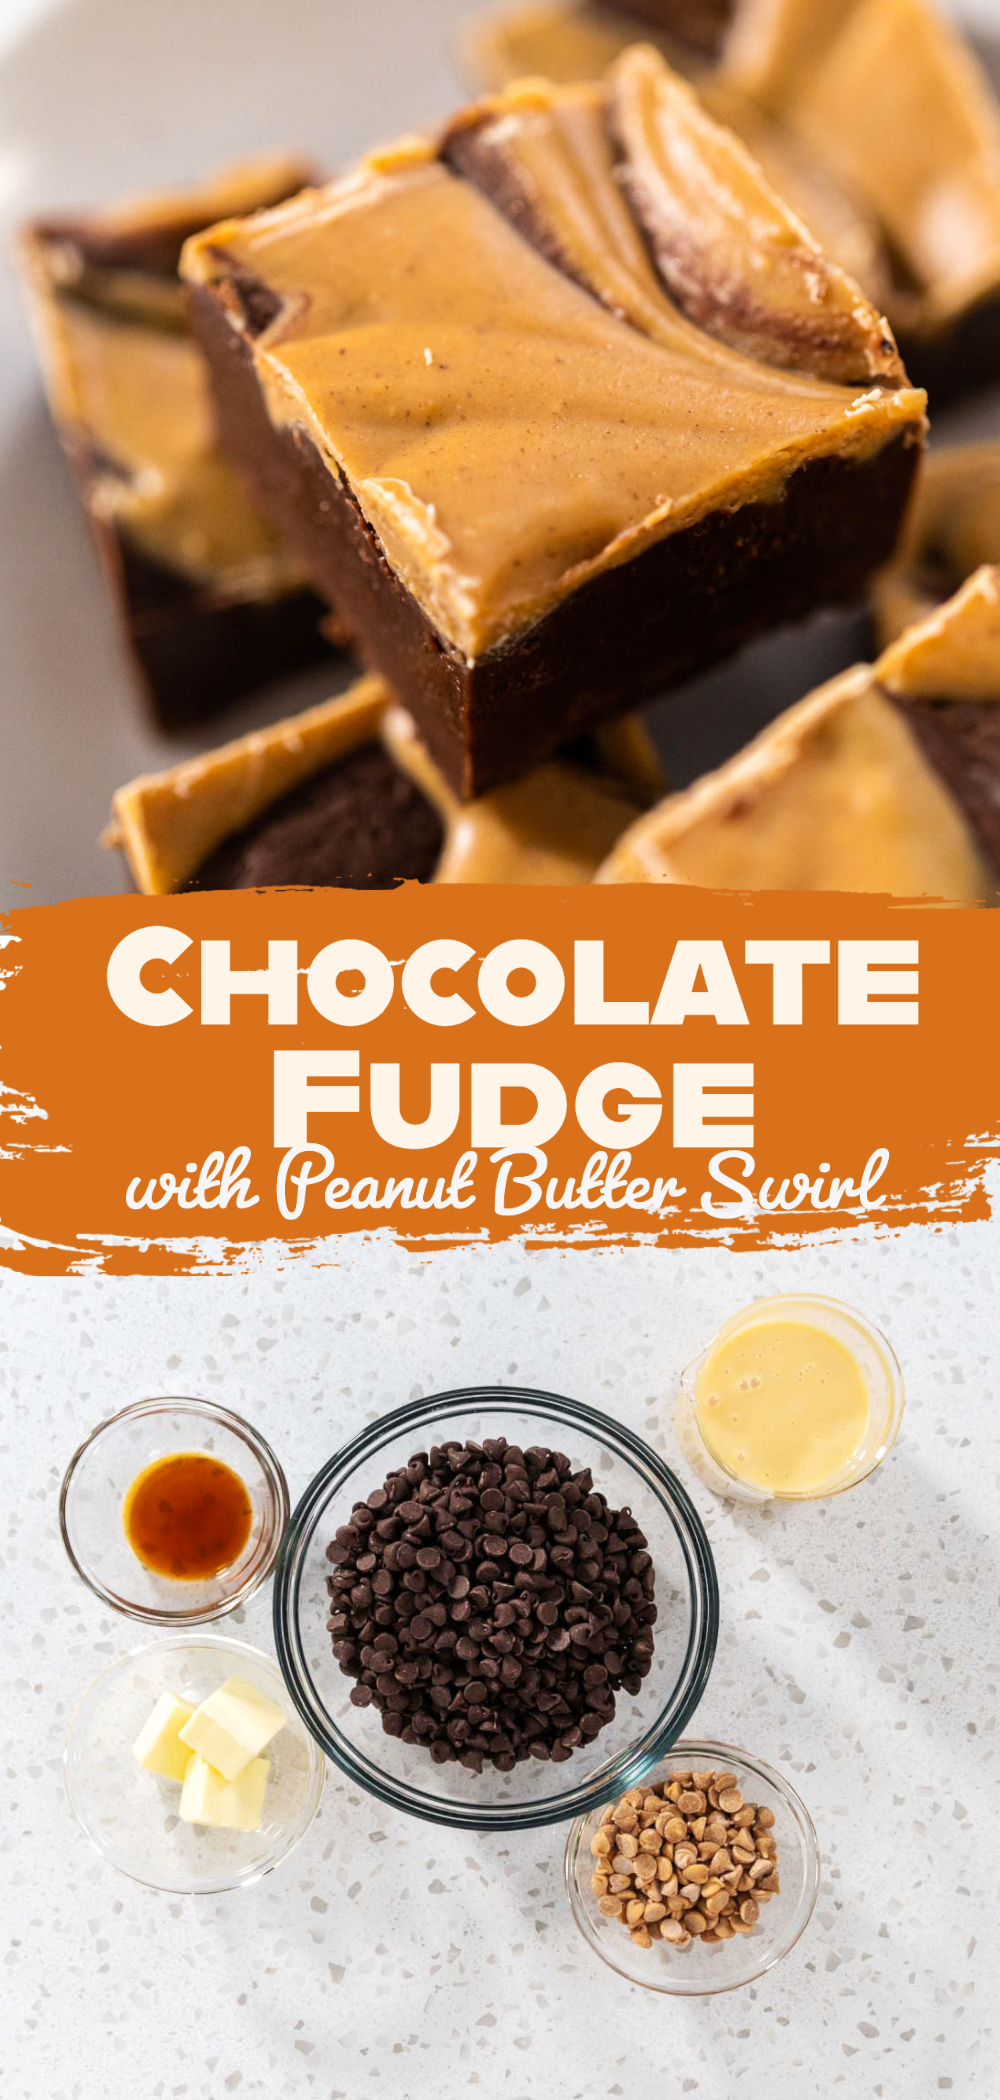 Chocolate Fudge with Peanut Butter Swirl